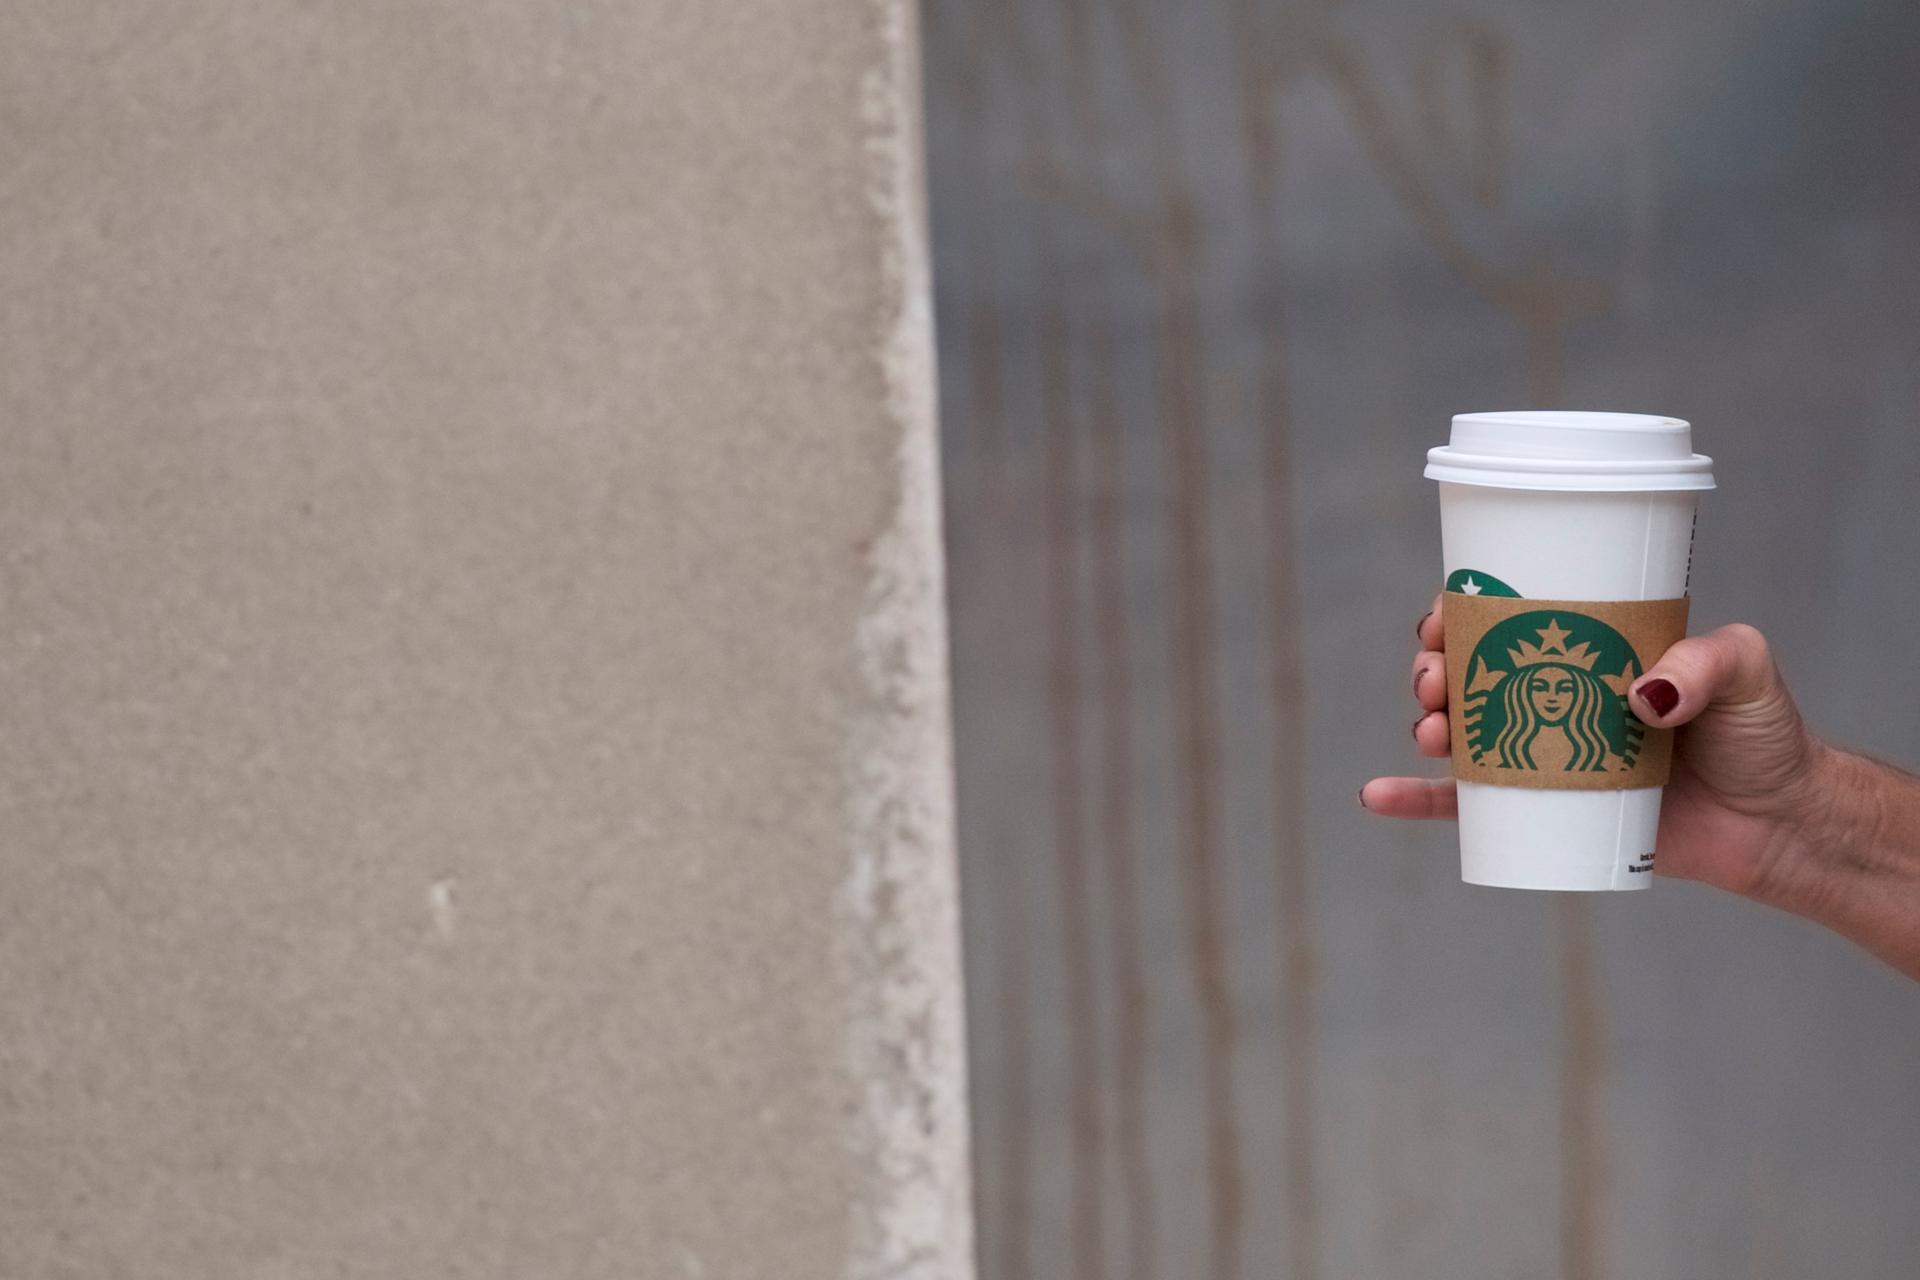 A woman walks through Center City in  Philadelphia, Pennsylvania, clutching a hot Starbucks beverage